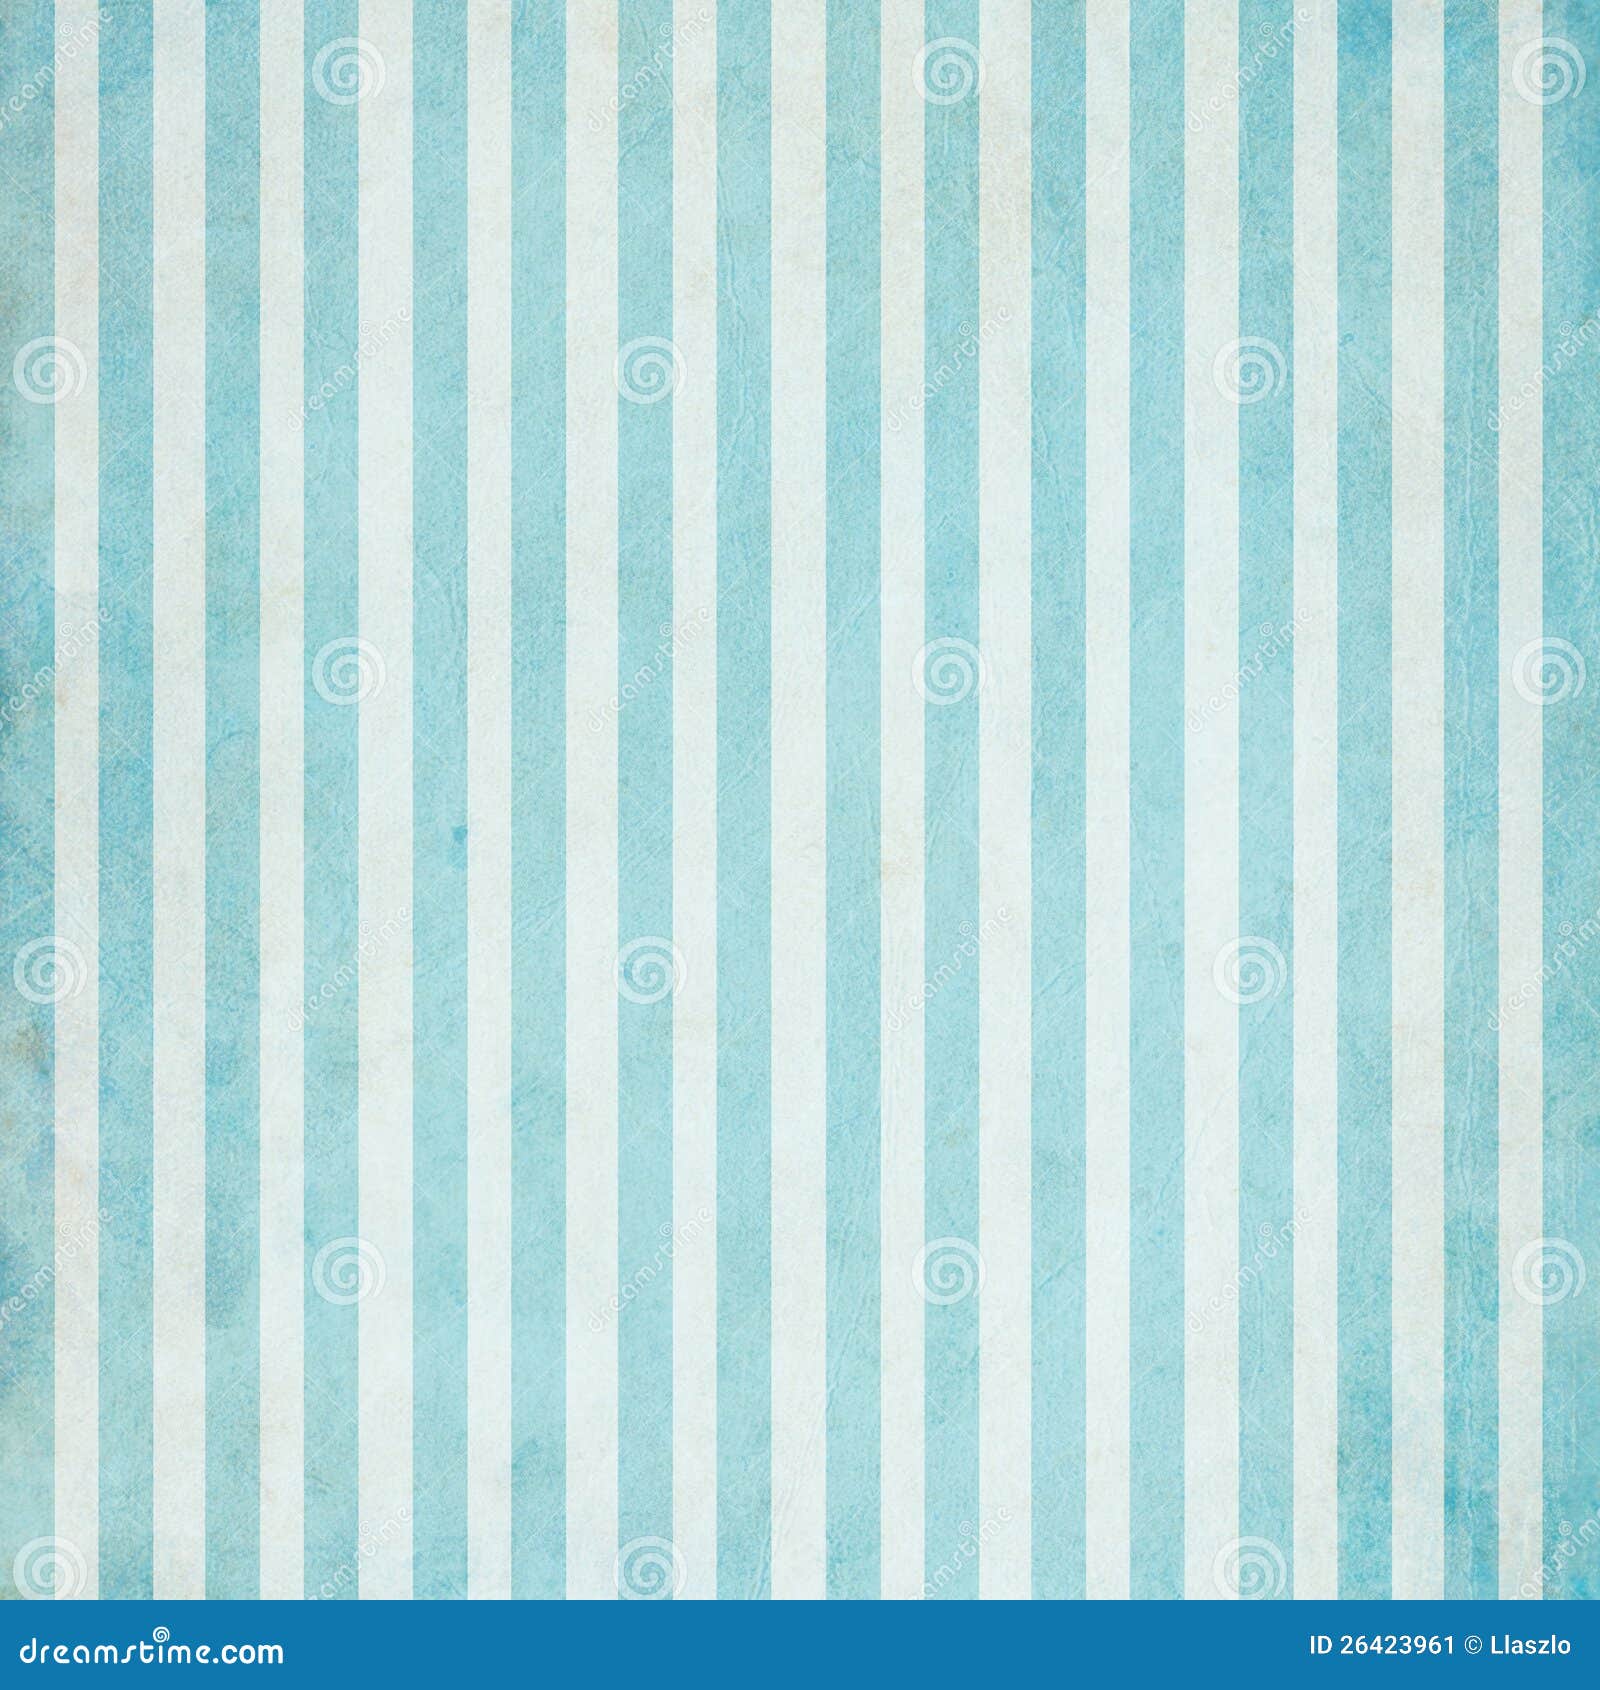 Blue striped background stock illustration. Illustration of composition ...